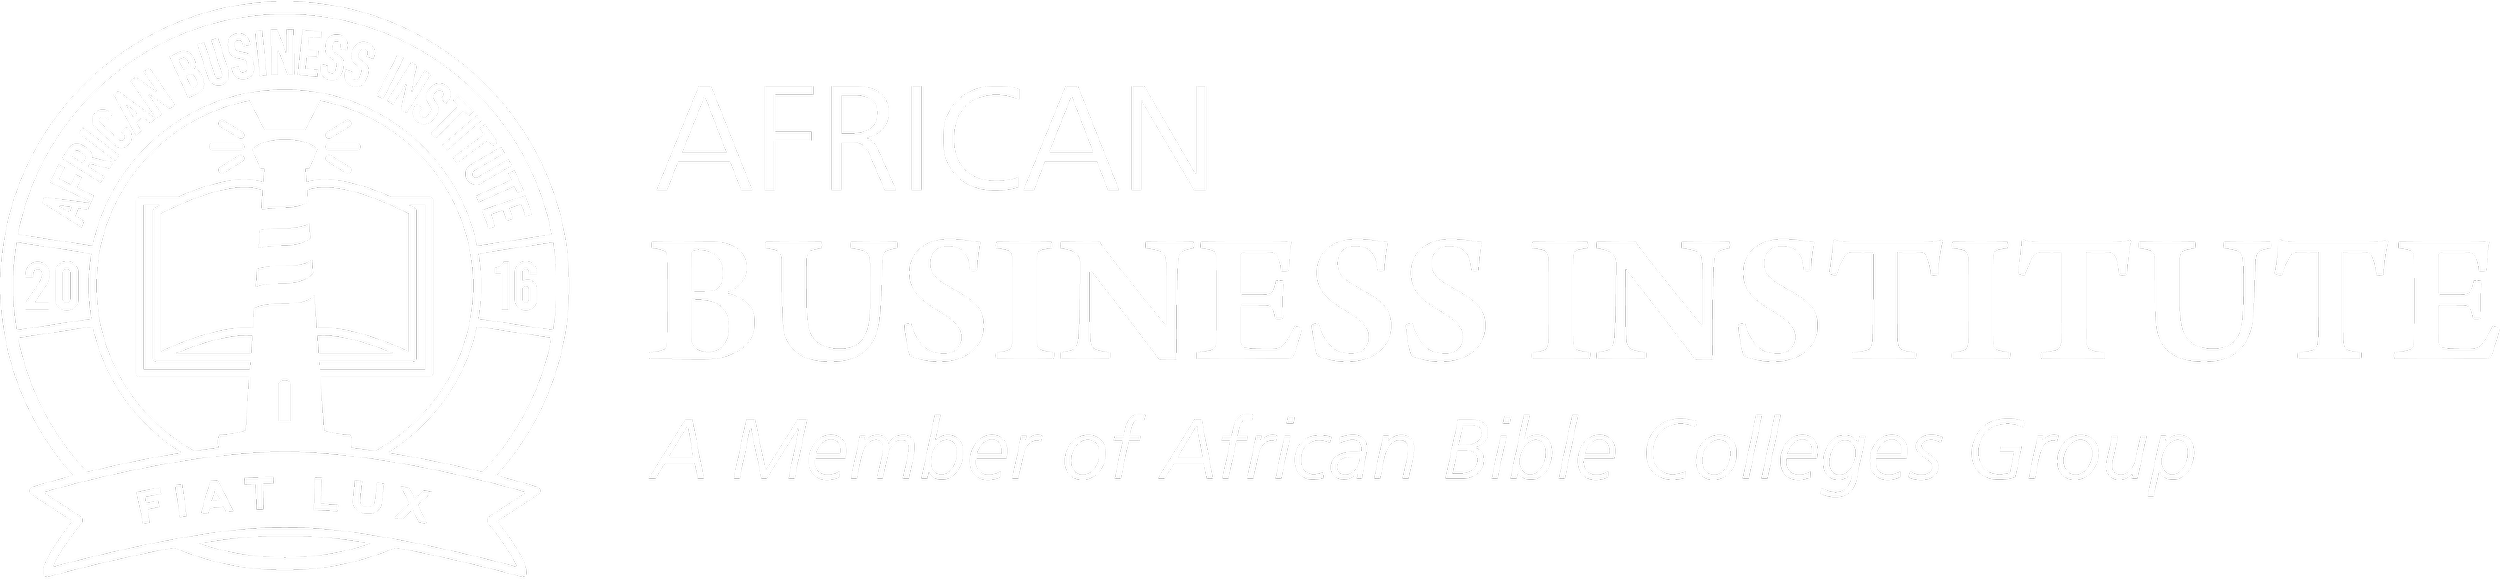 African Business Institute